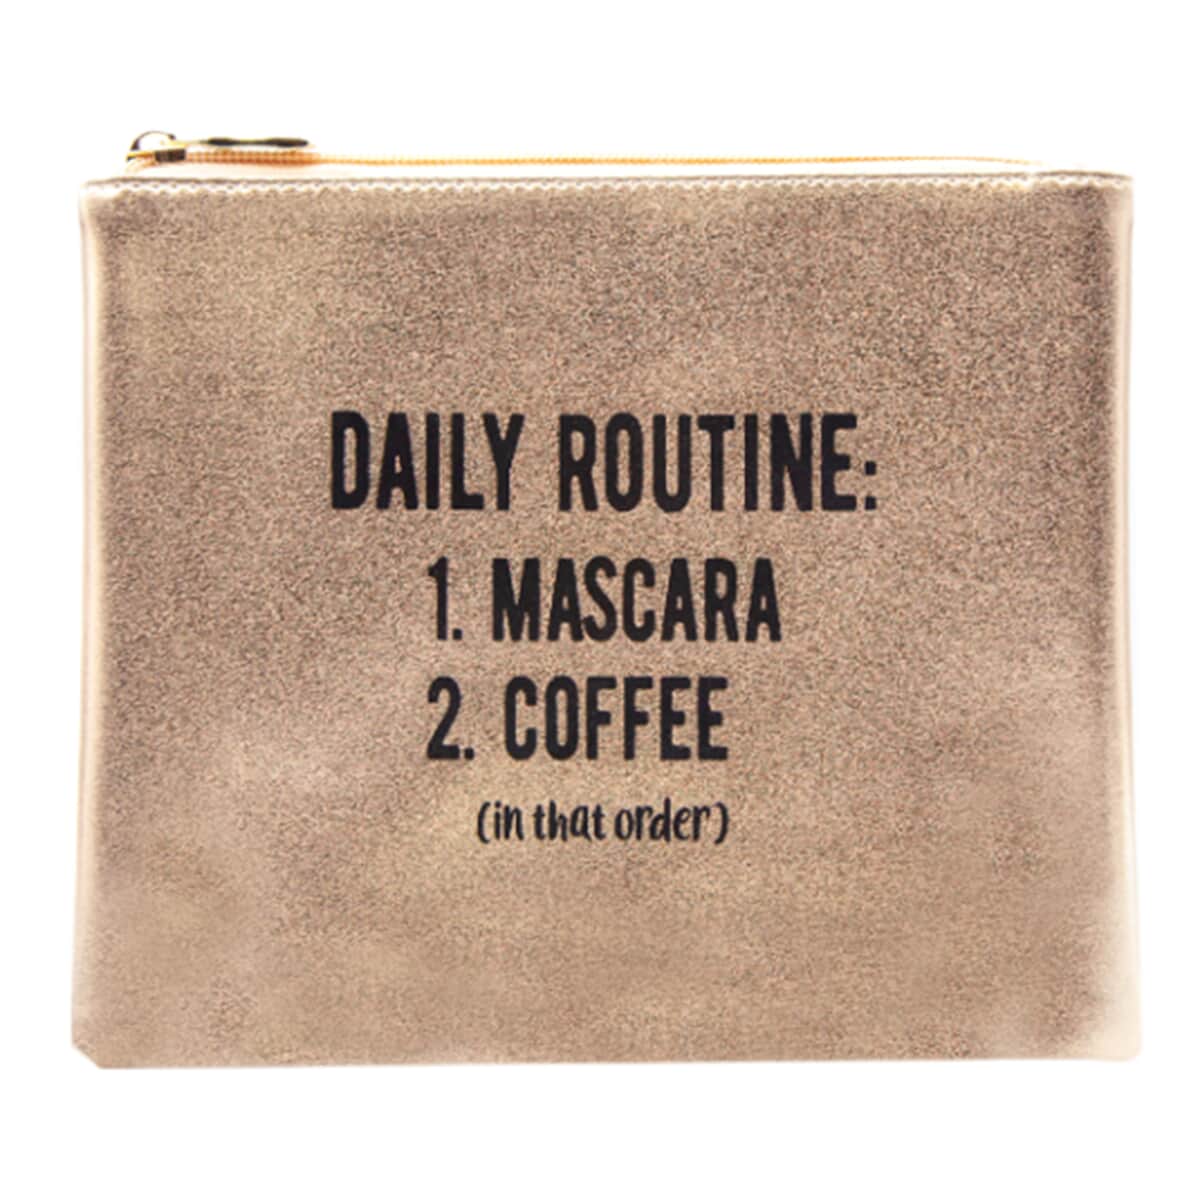 Metallic Gold Vegan Leather Daily Routine Cosmetic Bag | Makeup Bag | Makeup Pouch | Travel Makeup at ShopLC.